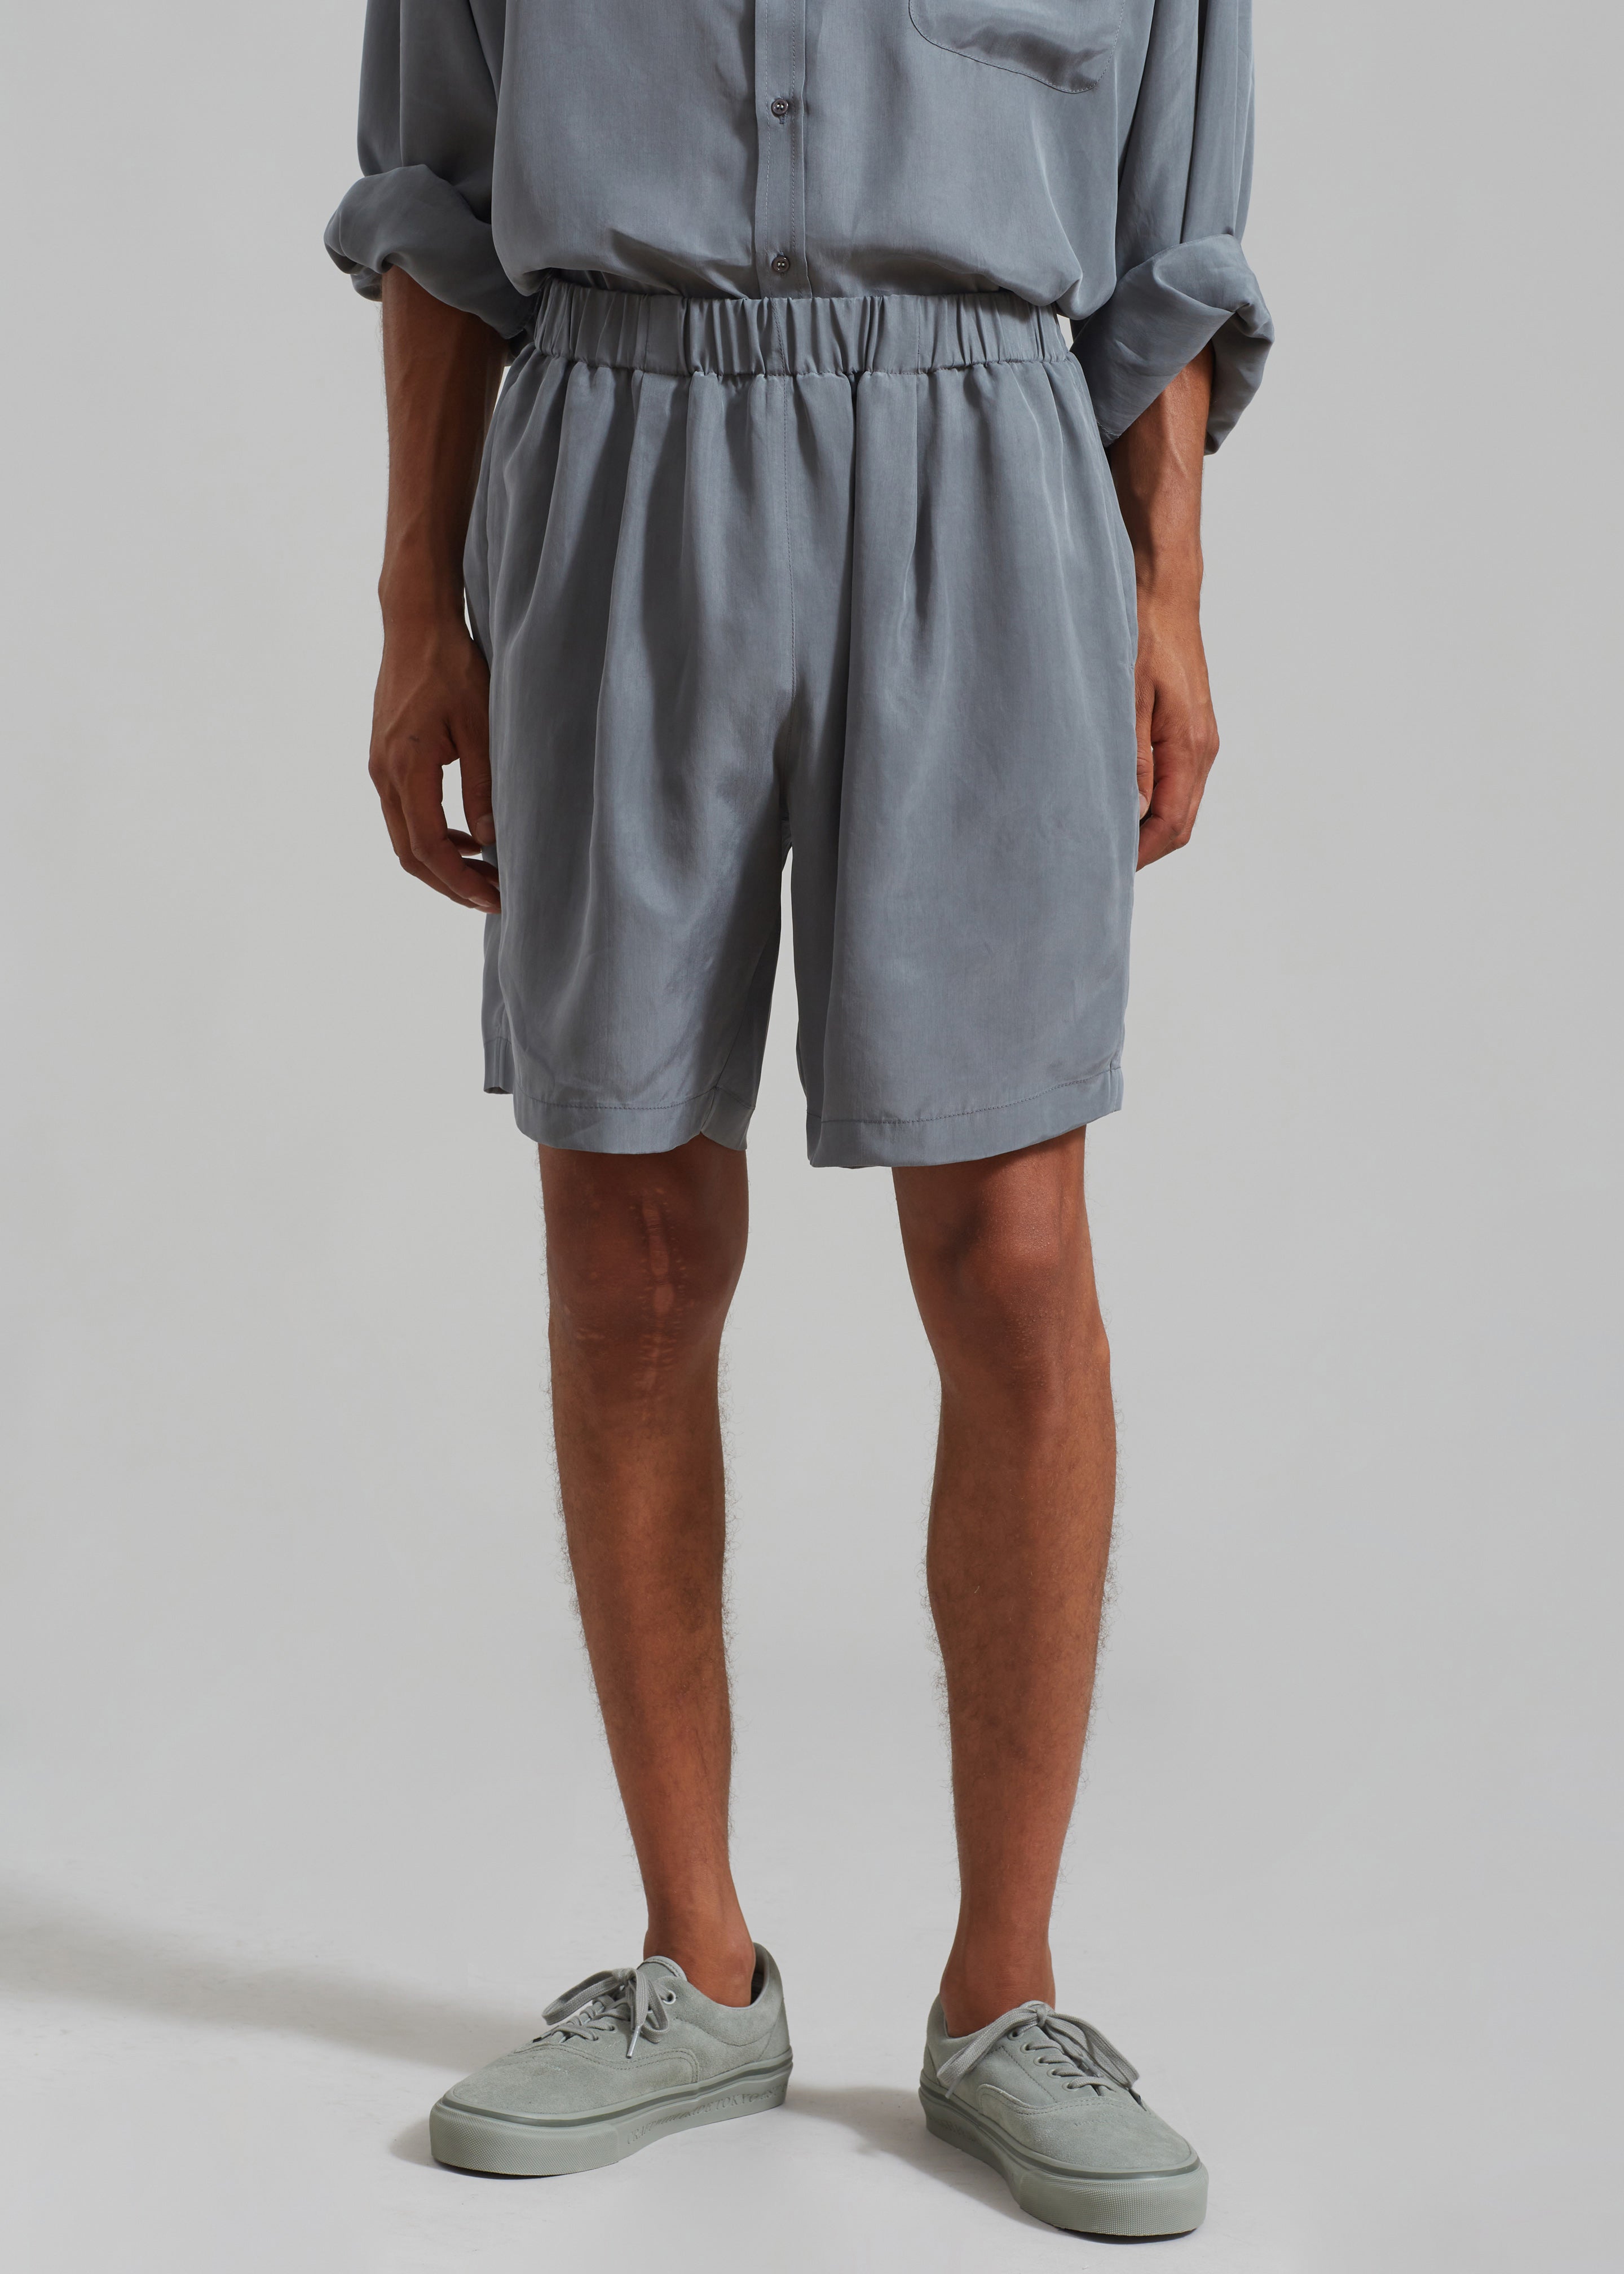 Leland Silky Boxer Shorts - Charcoal - 2